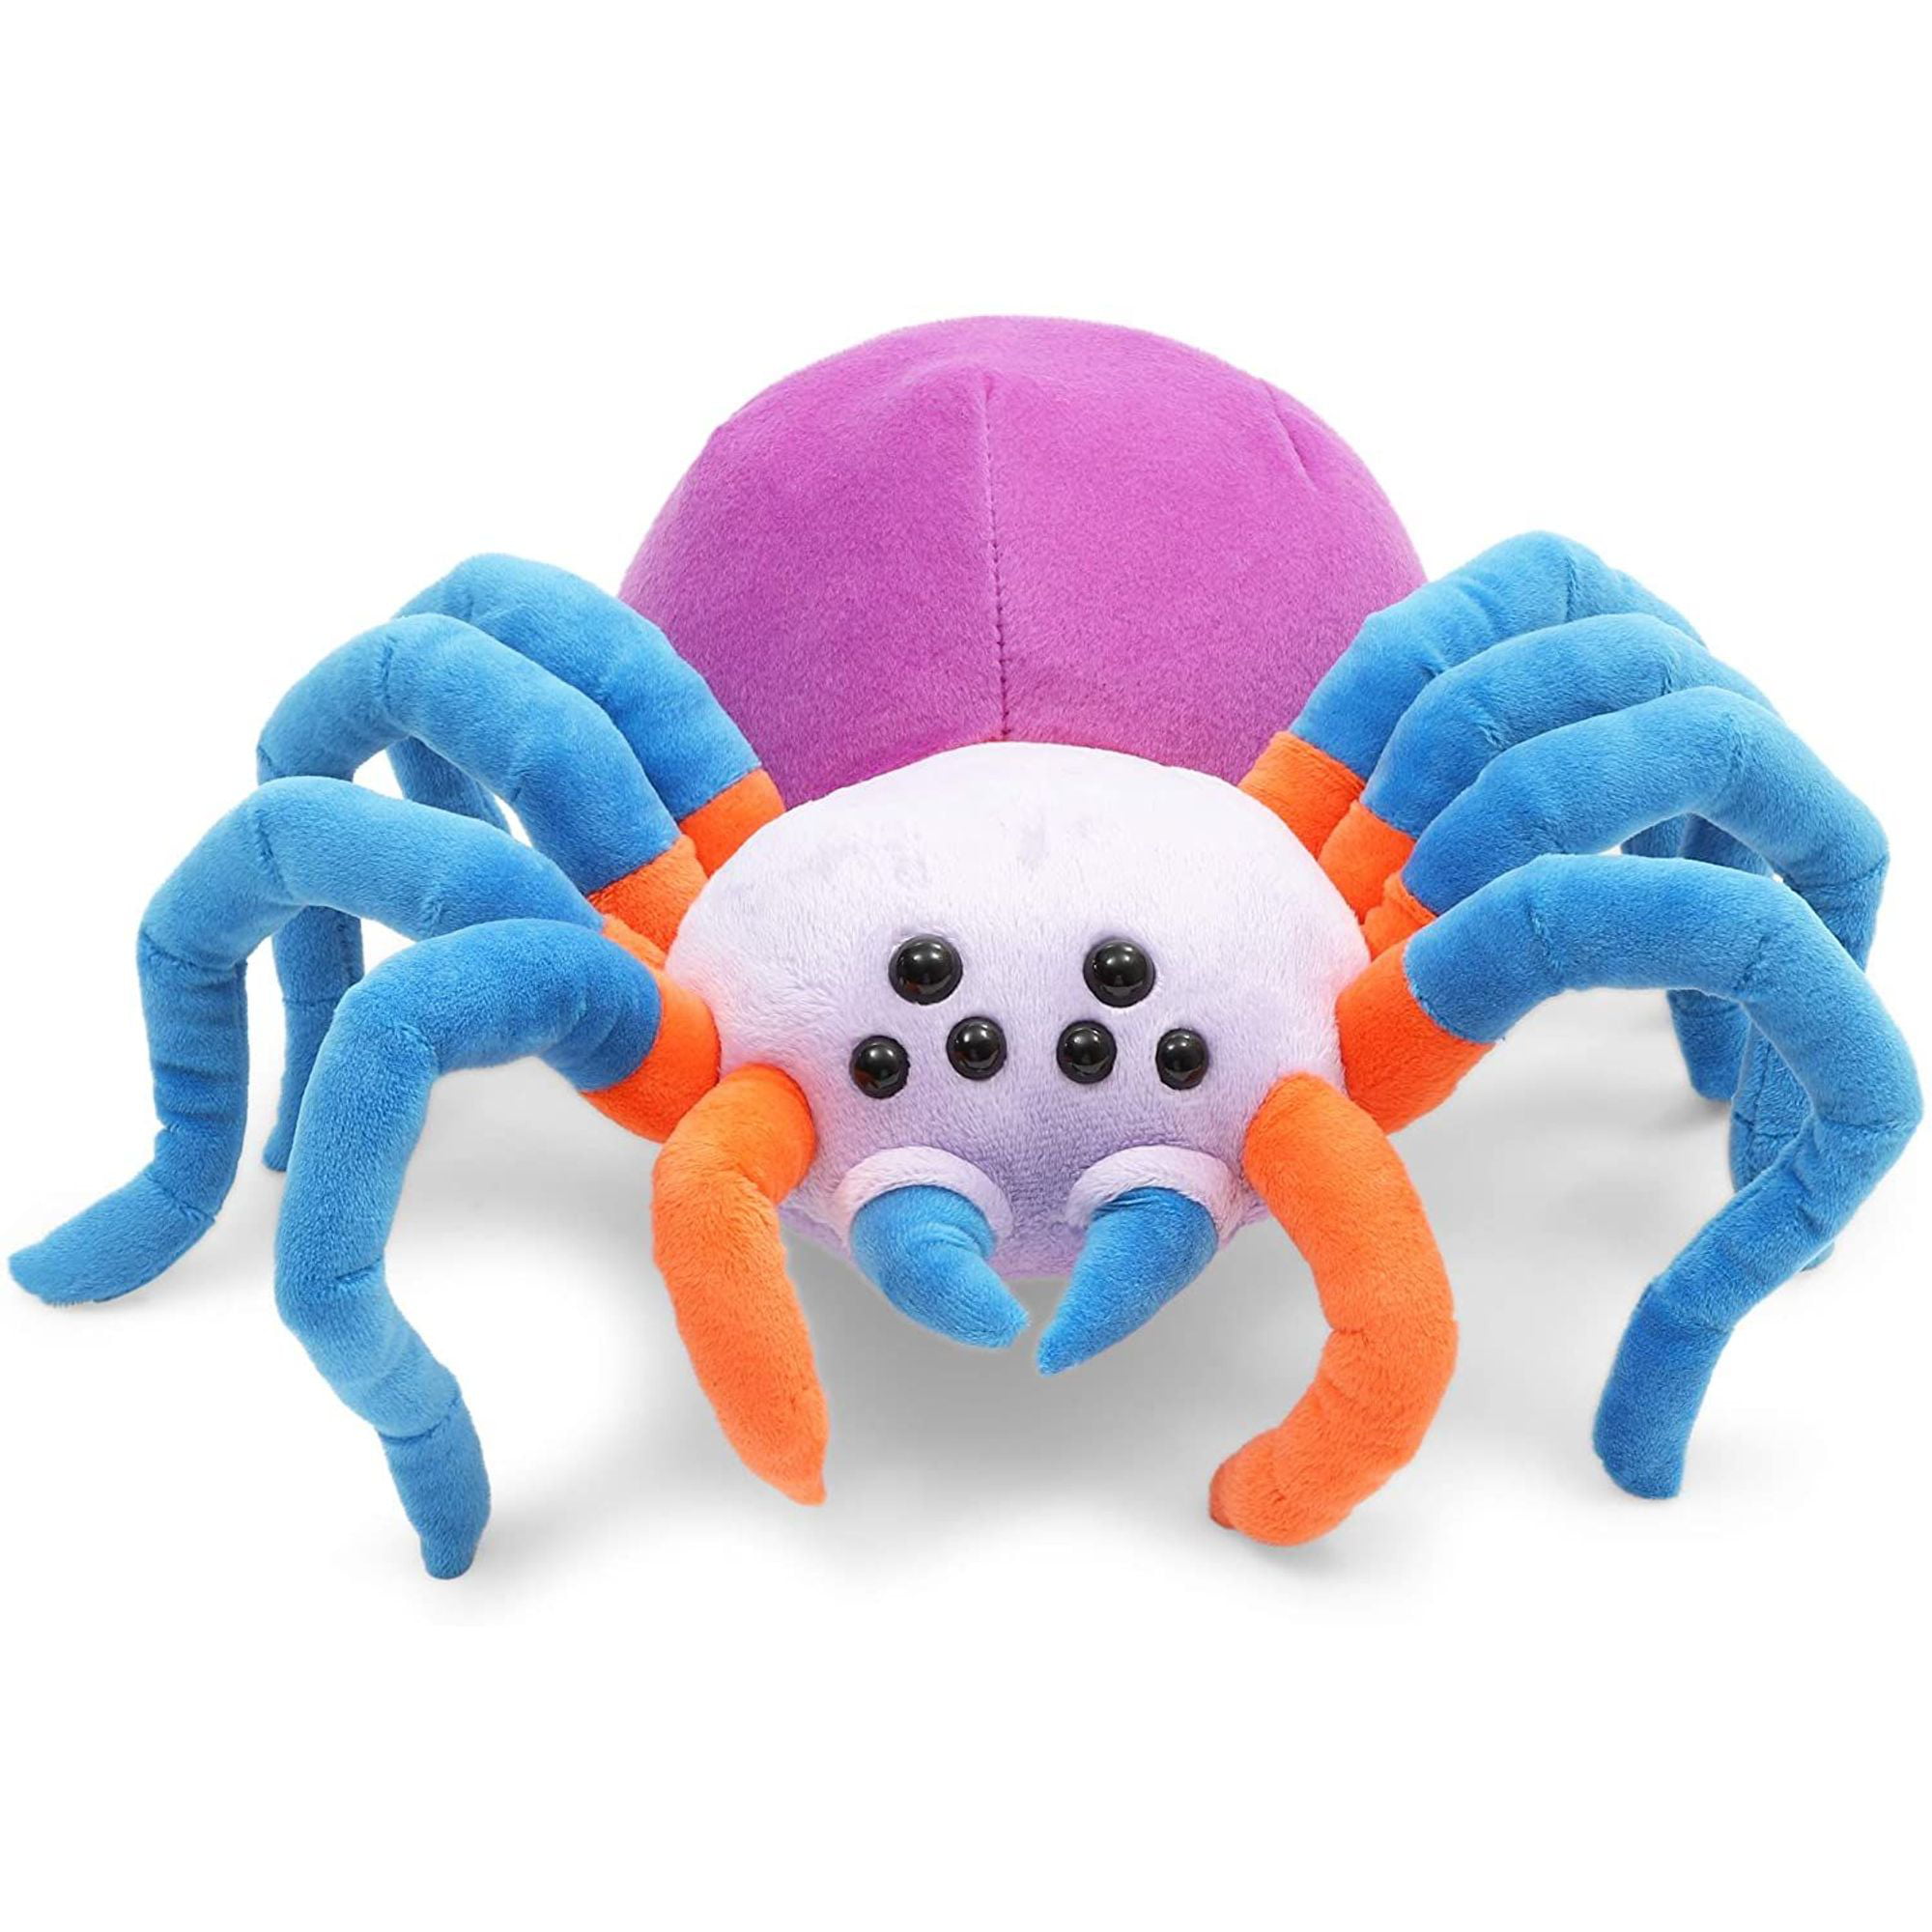 Spider Stuffed Animal